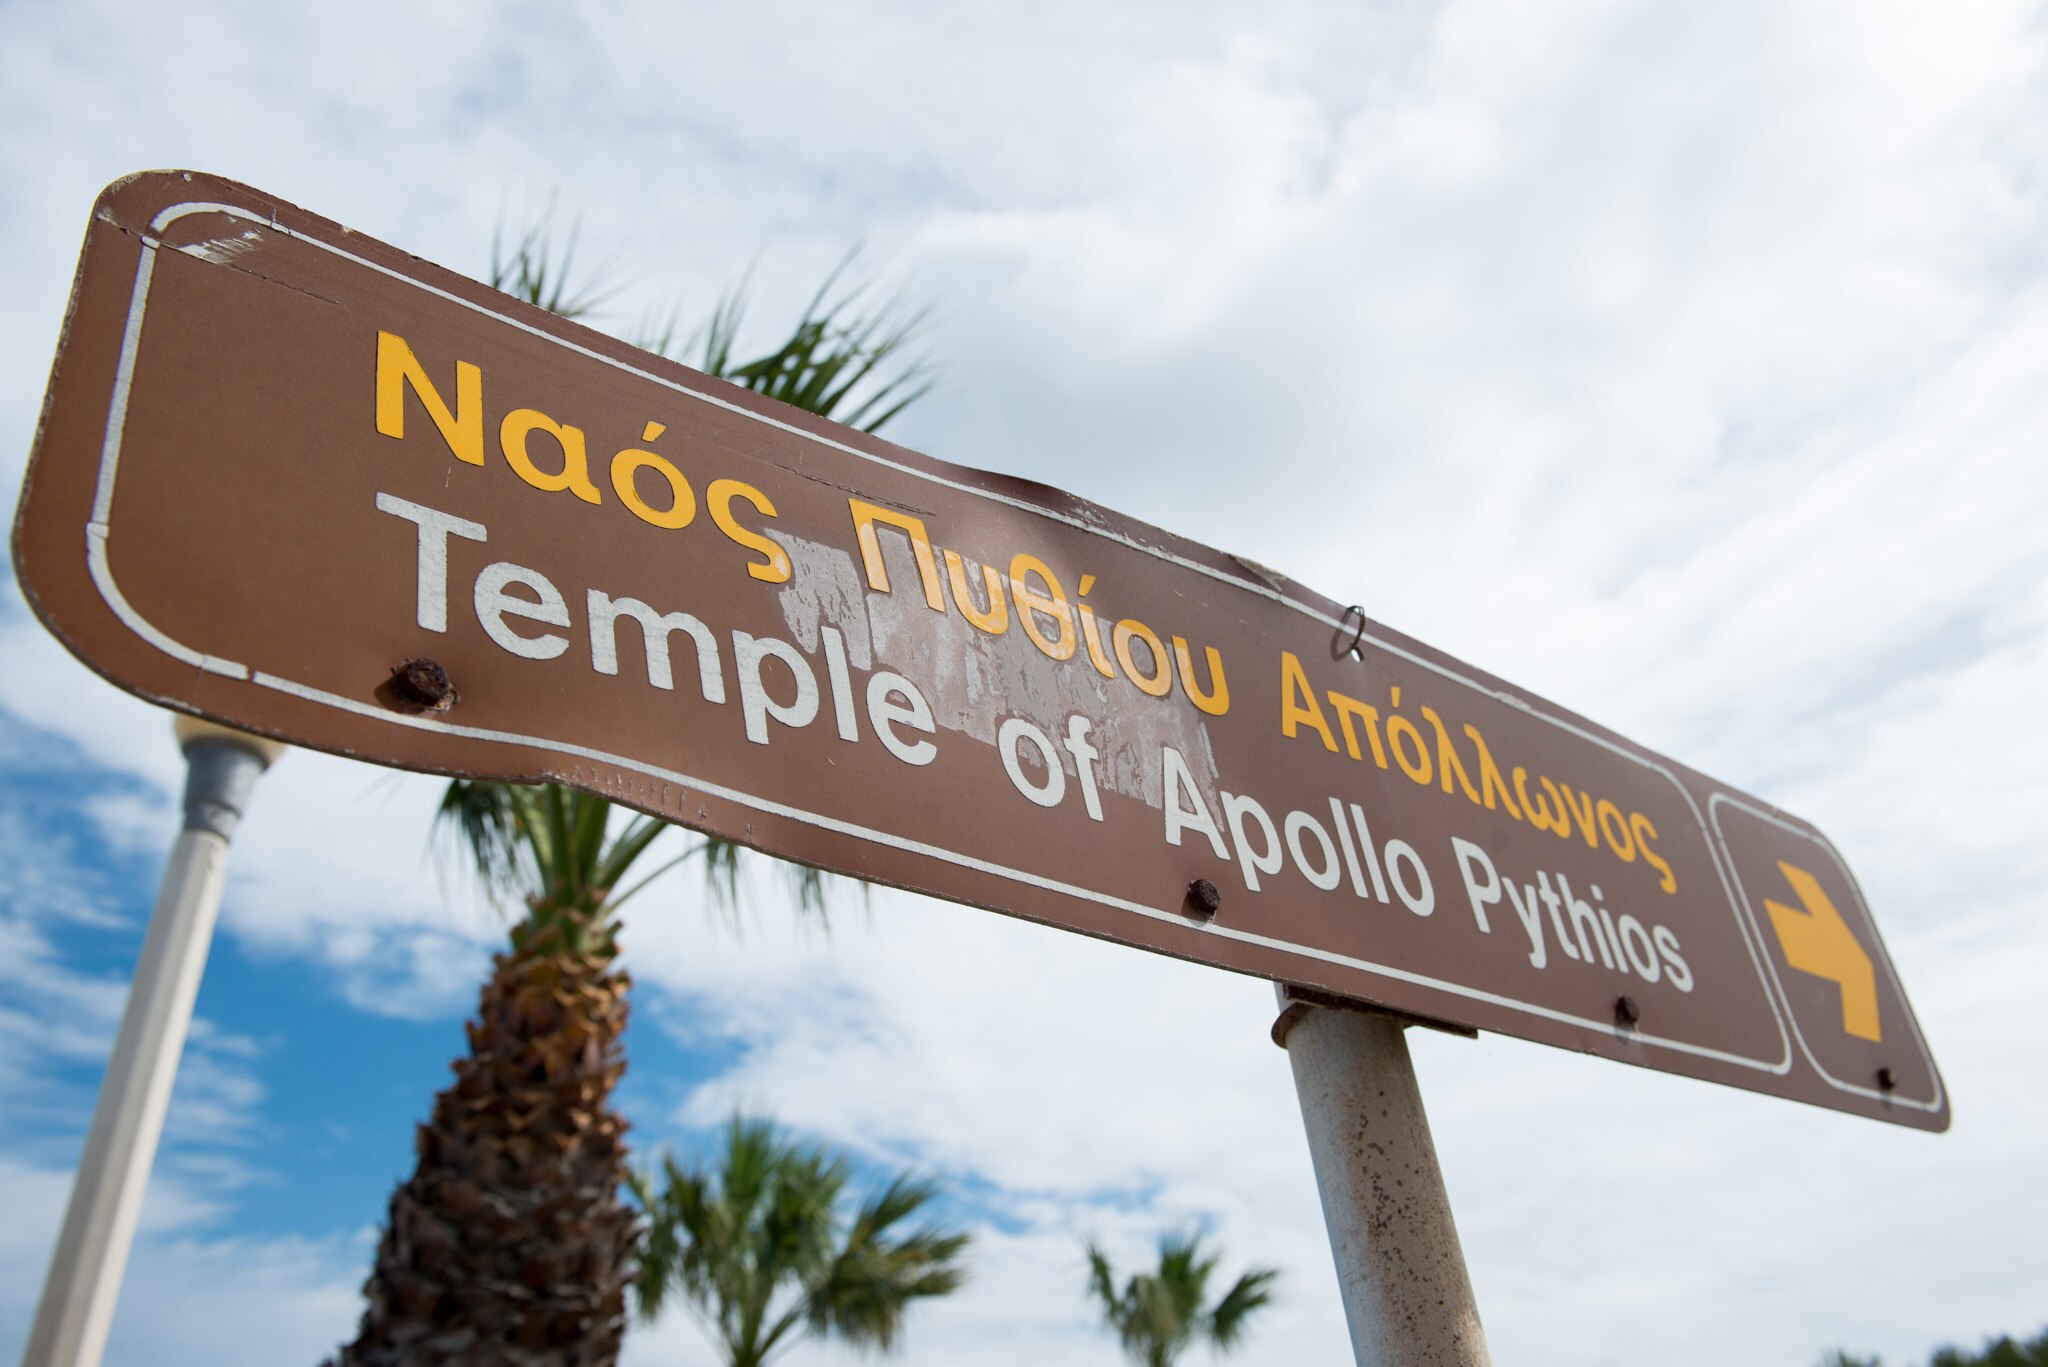 Pythion Temple of Apollo